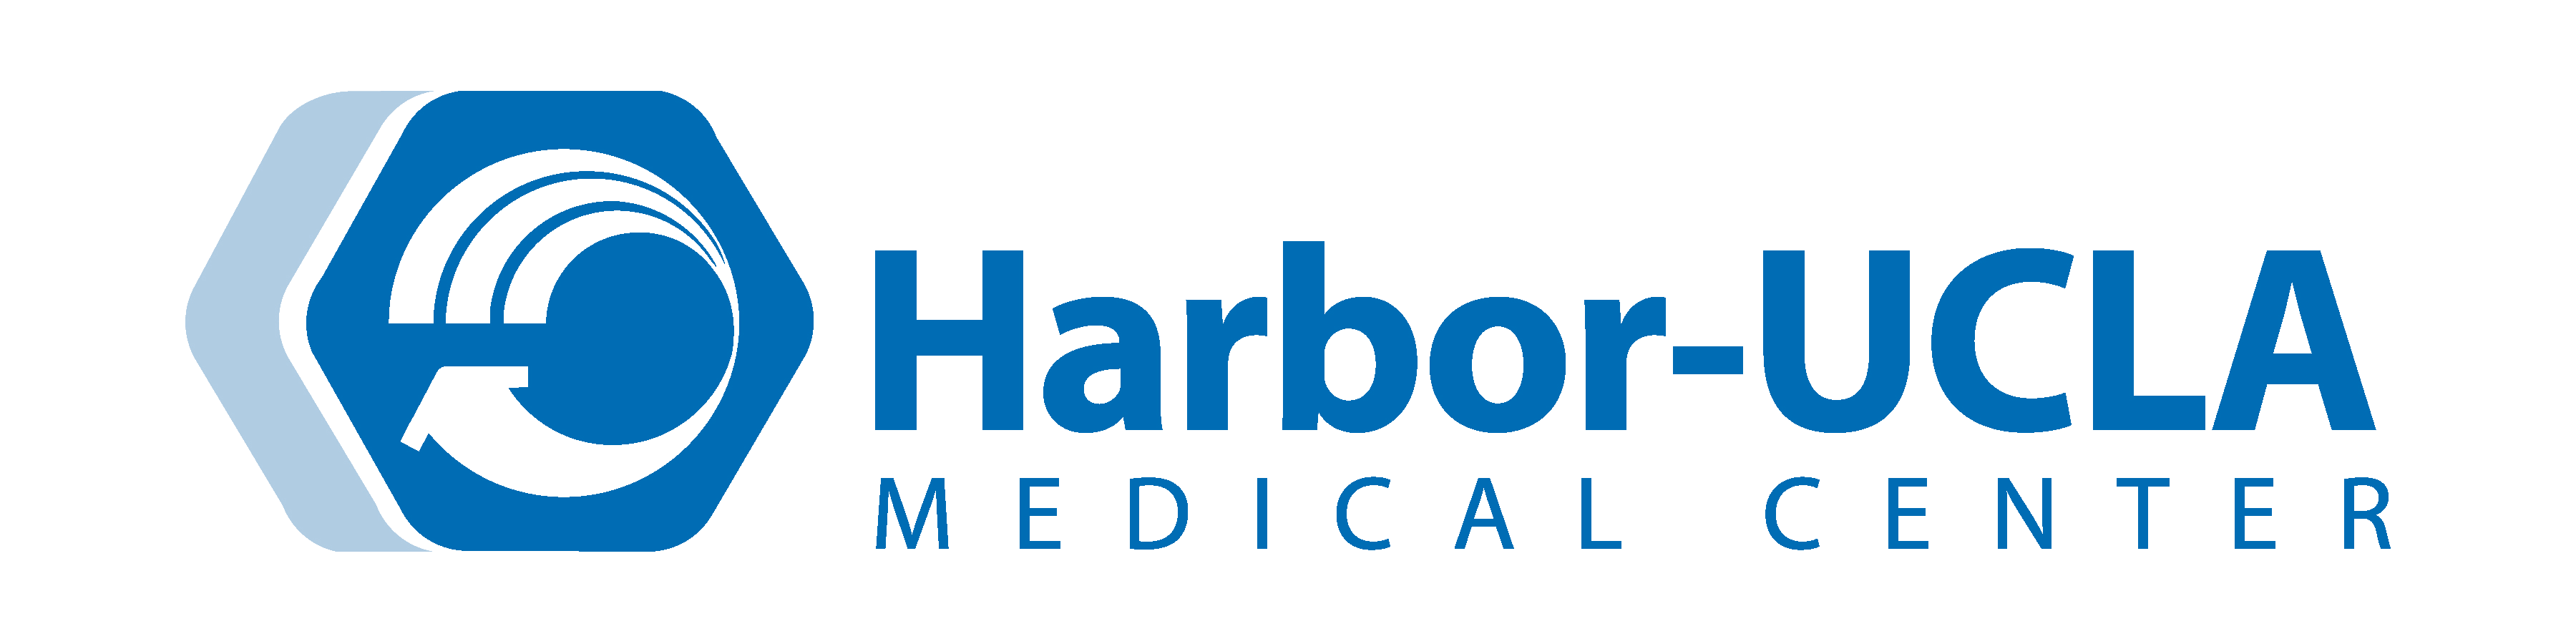 Harbor UCLA Medical Center logo linking to website